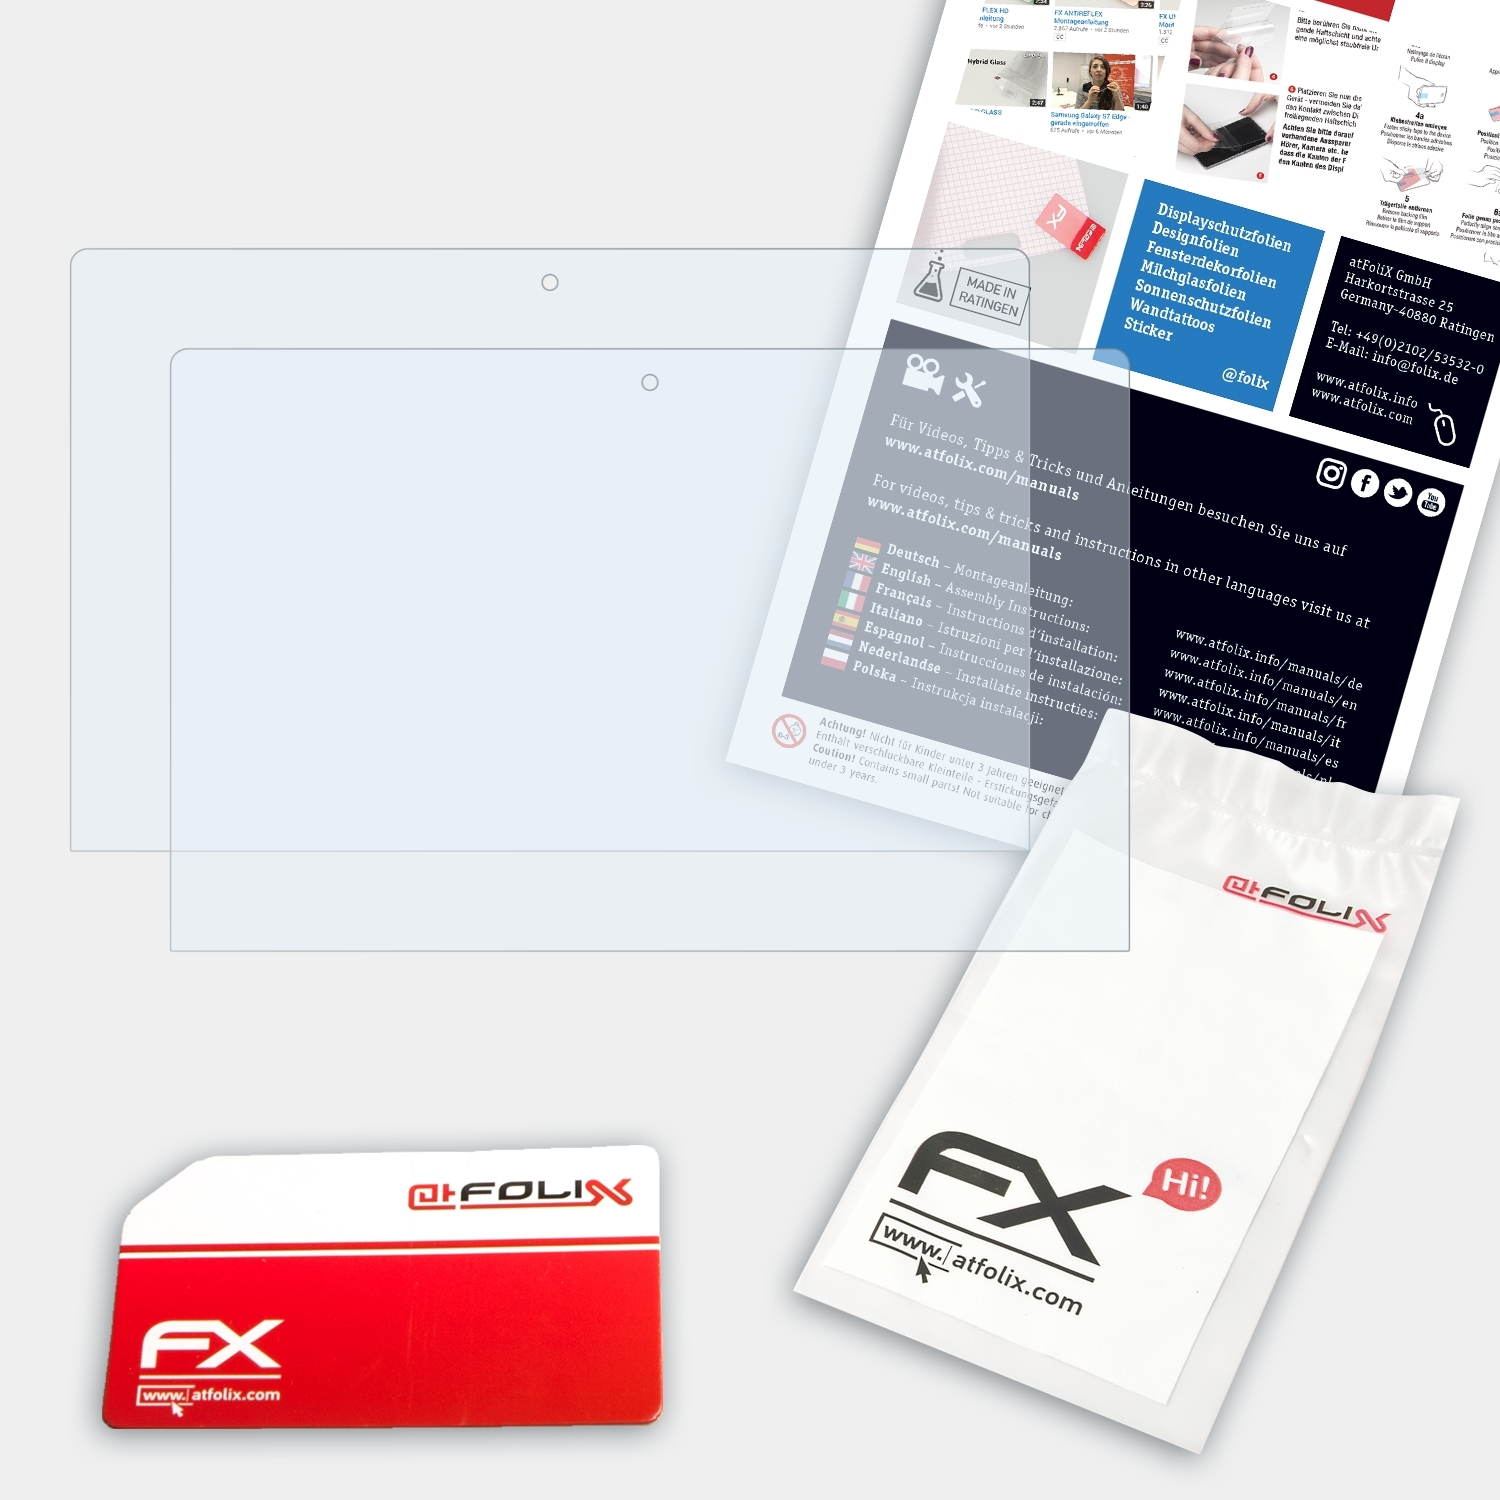 Yoga 2x ATFOLIX 11) IdeaPad Displayschutz(für Lenovo FX-Clear 2